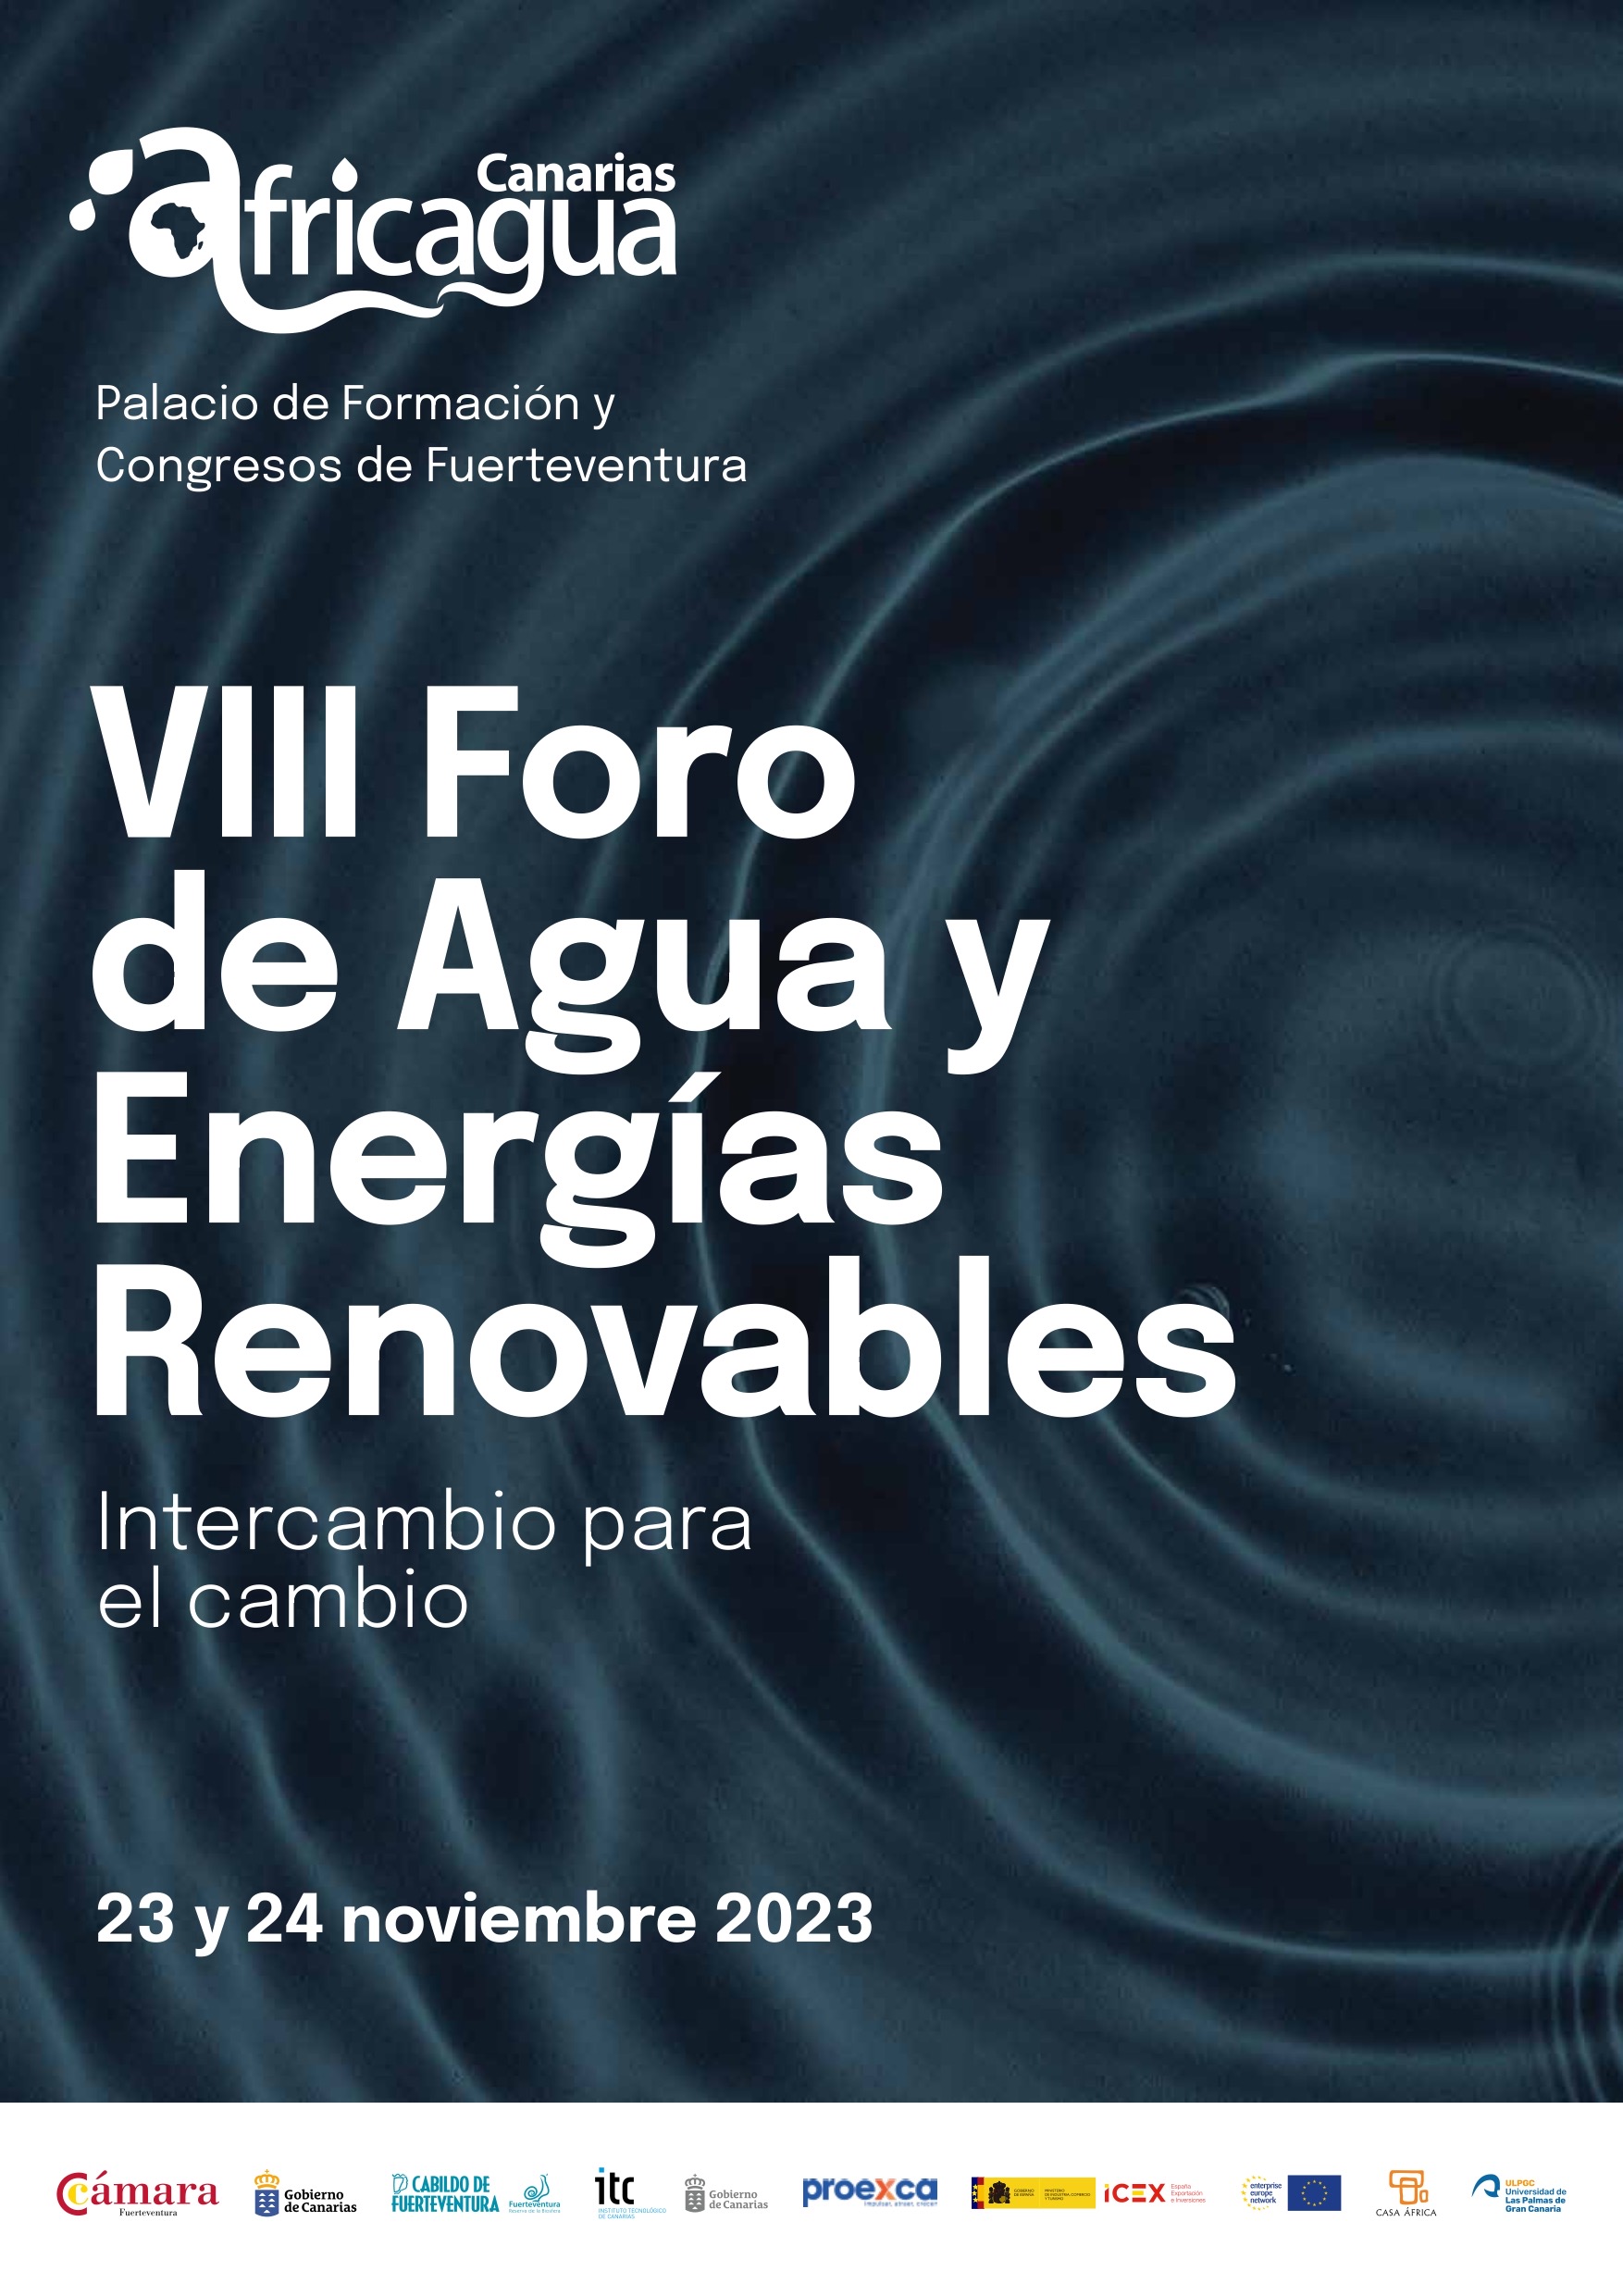 Canarie & Economia. "Africagua Canarias” a Fuerteventura il 23 e 24 novembre 2023